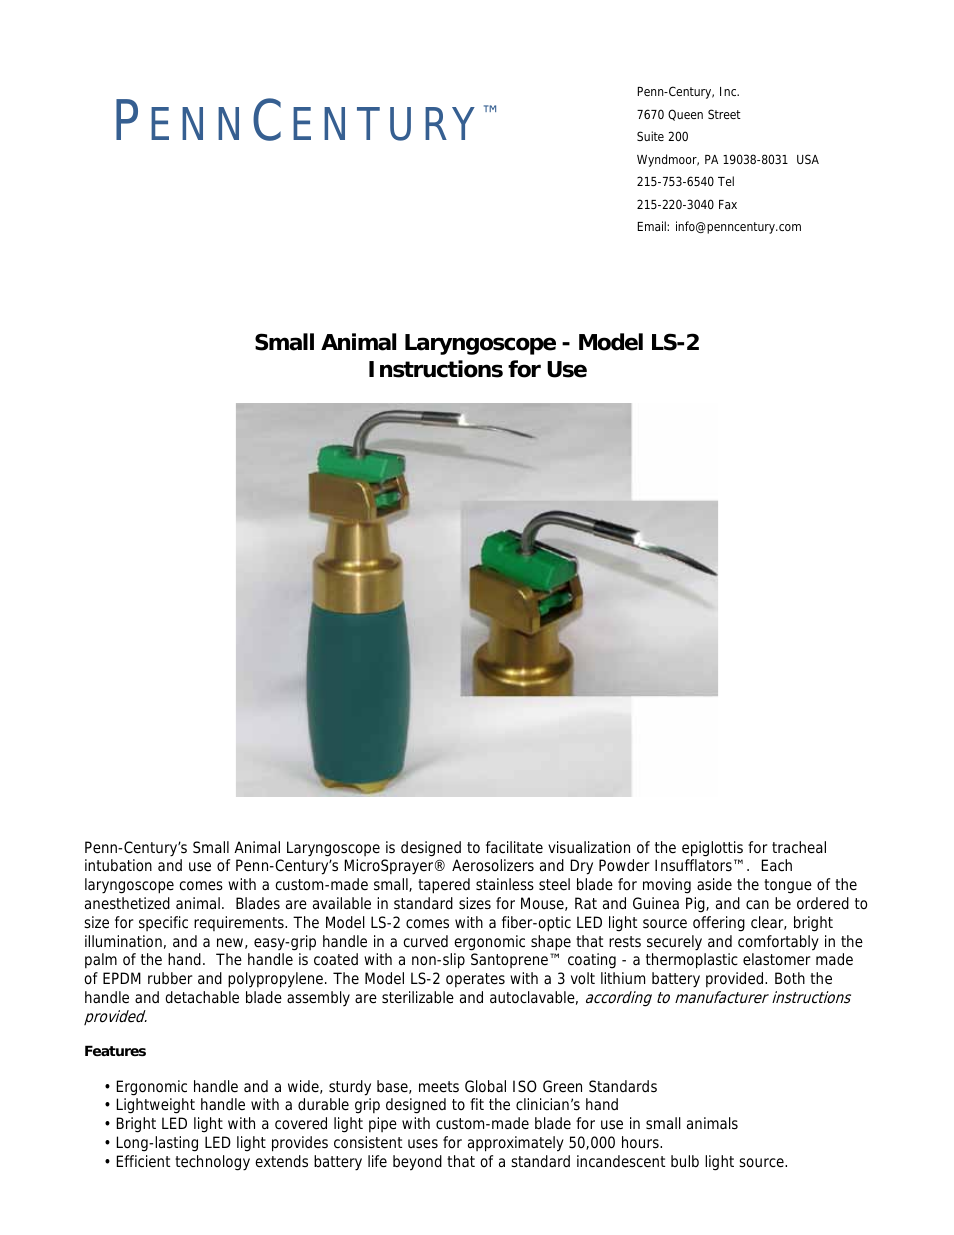 LS-2 Small Animal Laryngoscope